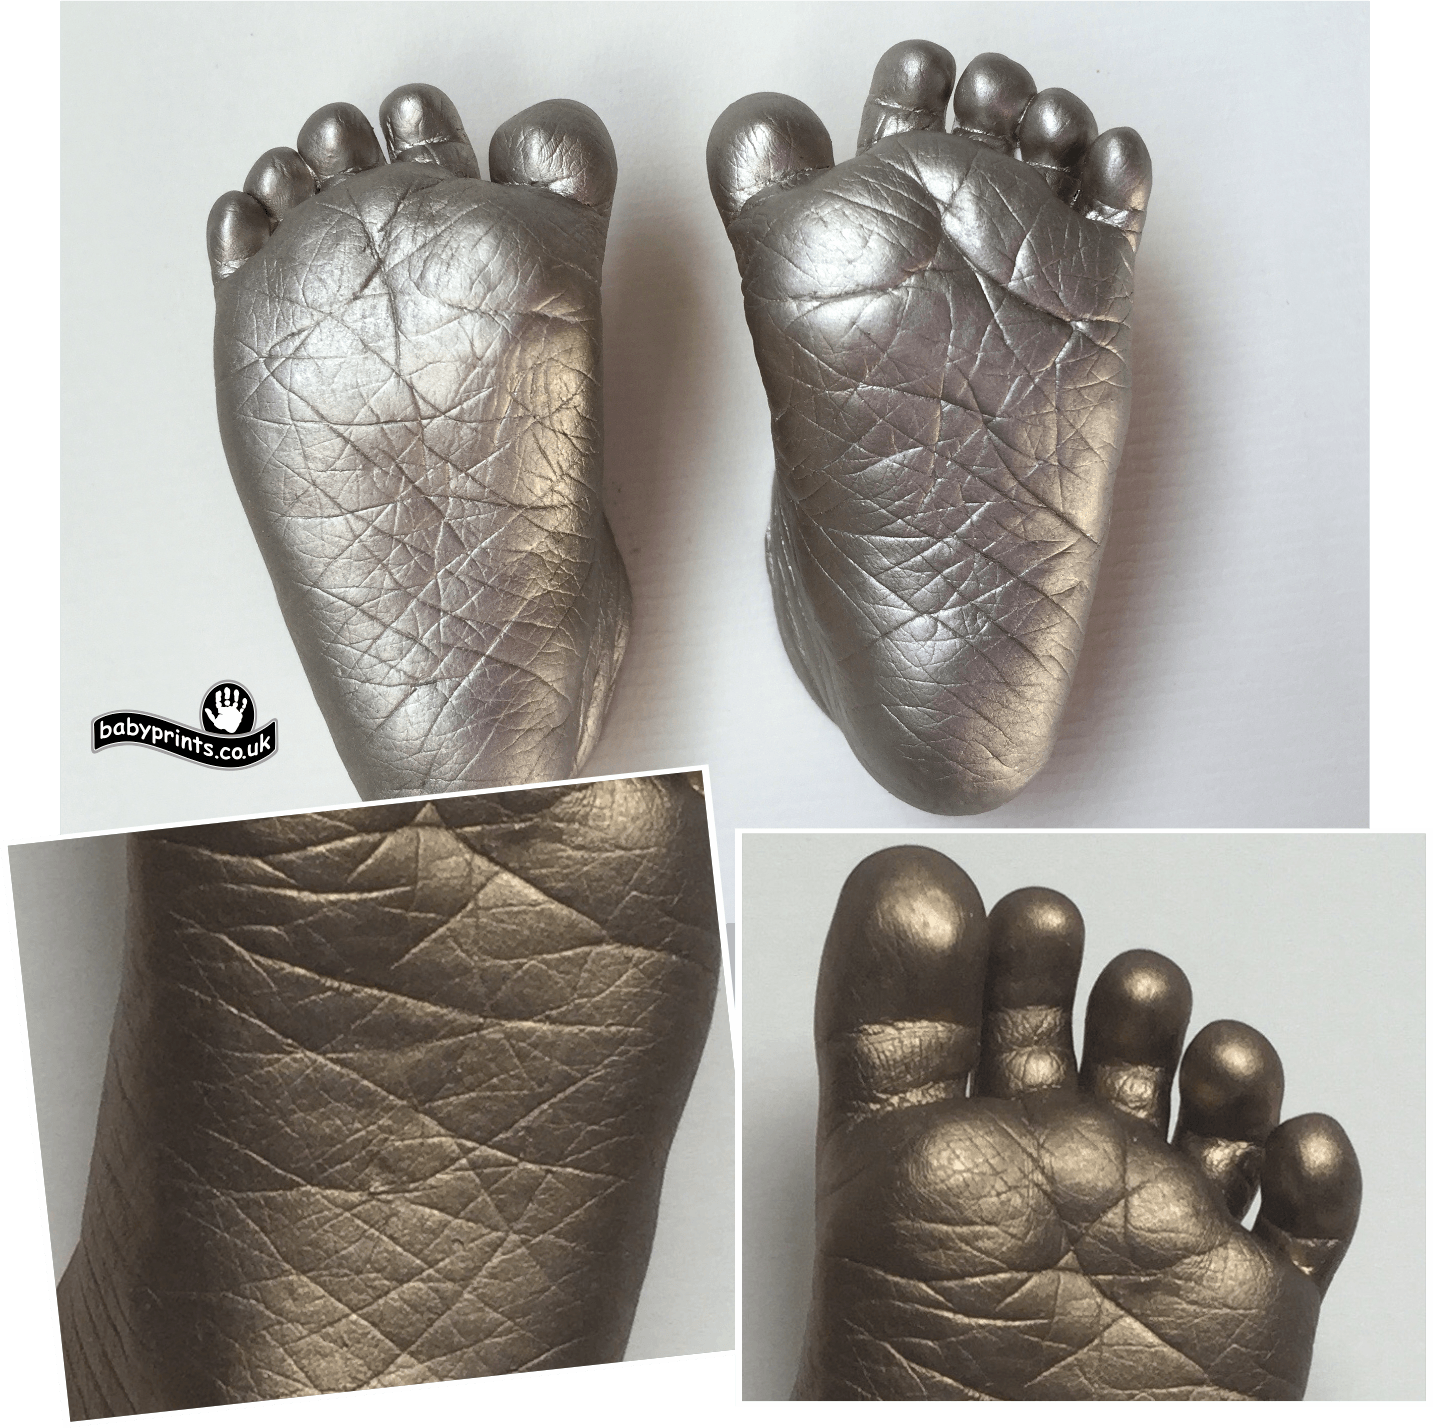 Baby feet casting